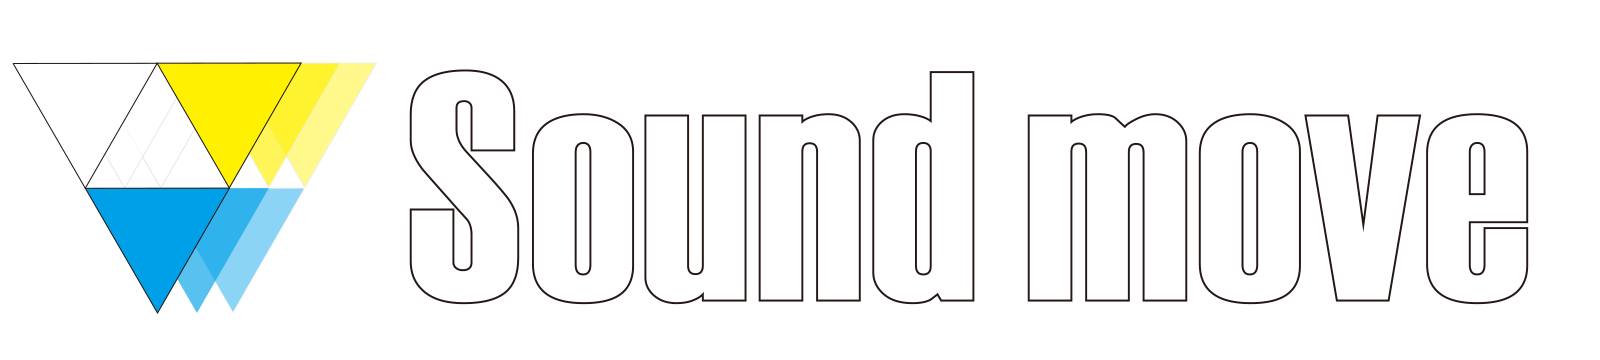 Sound move LLC